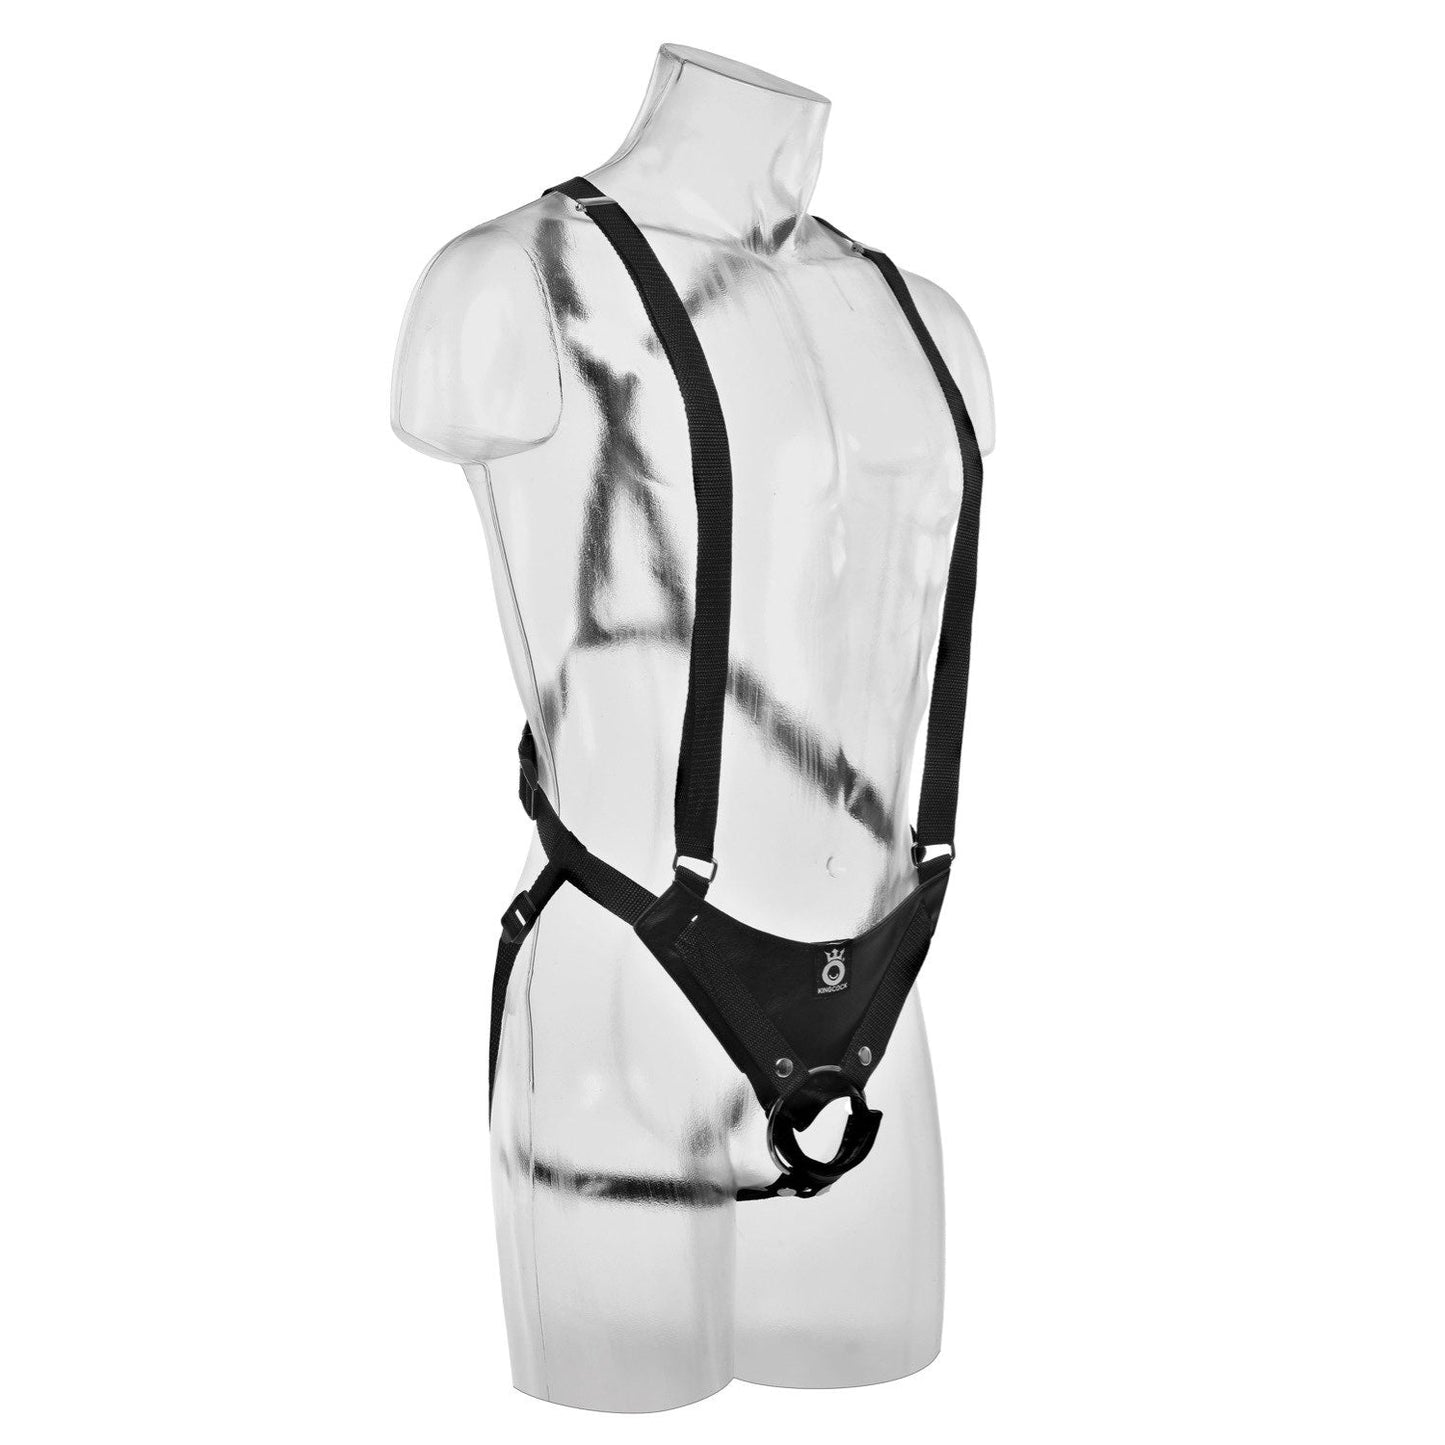 10" Hollow Strap-On Suspender System - Flesh 25.4 cm Hollow Strap-On with Suspender Harness